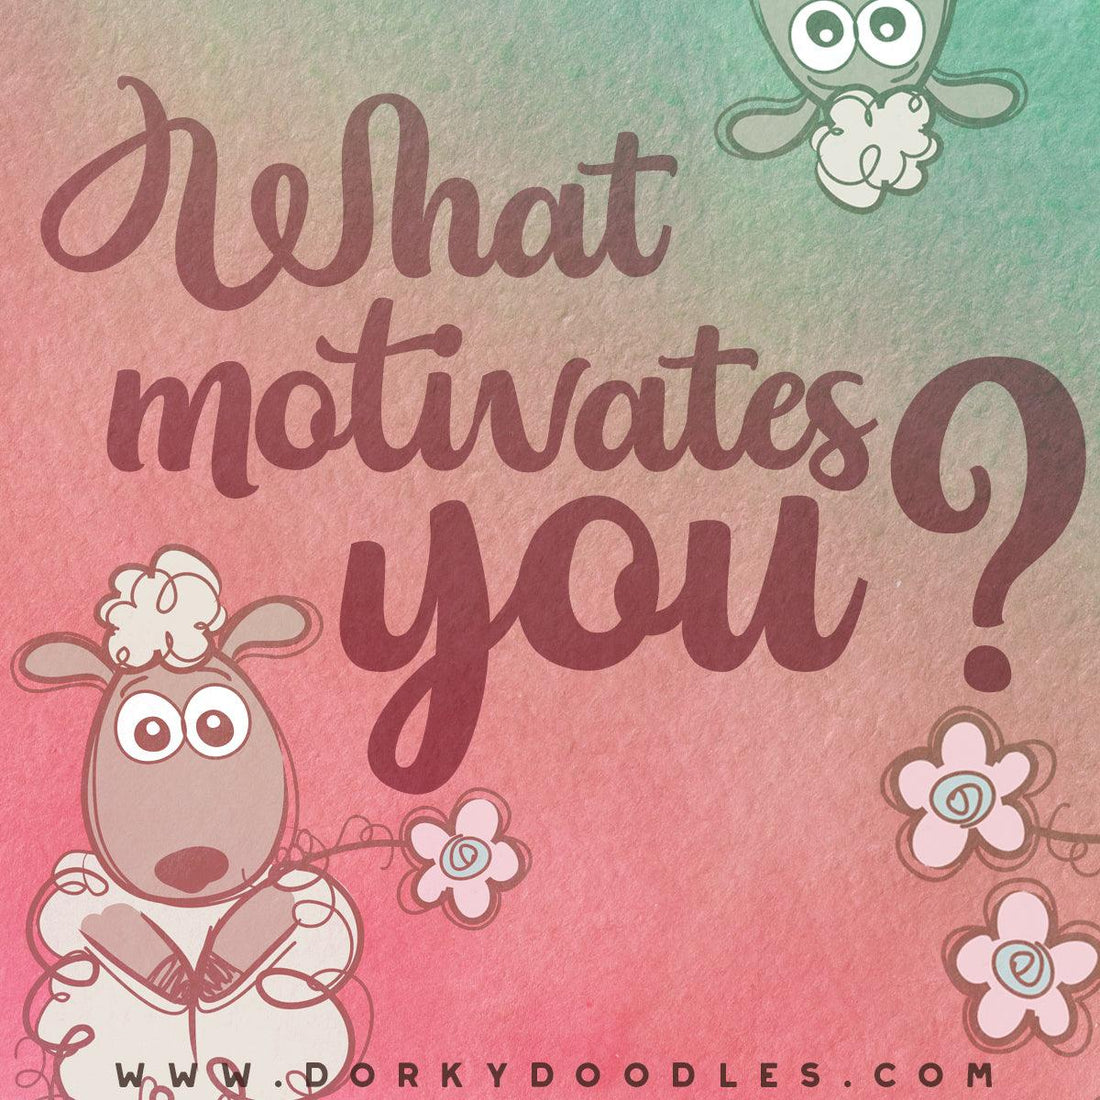 What Motivates You? - Dorky Doodles